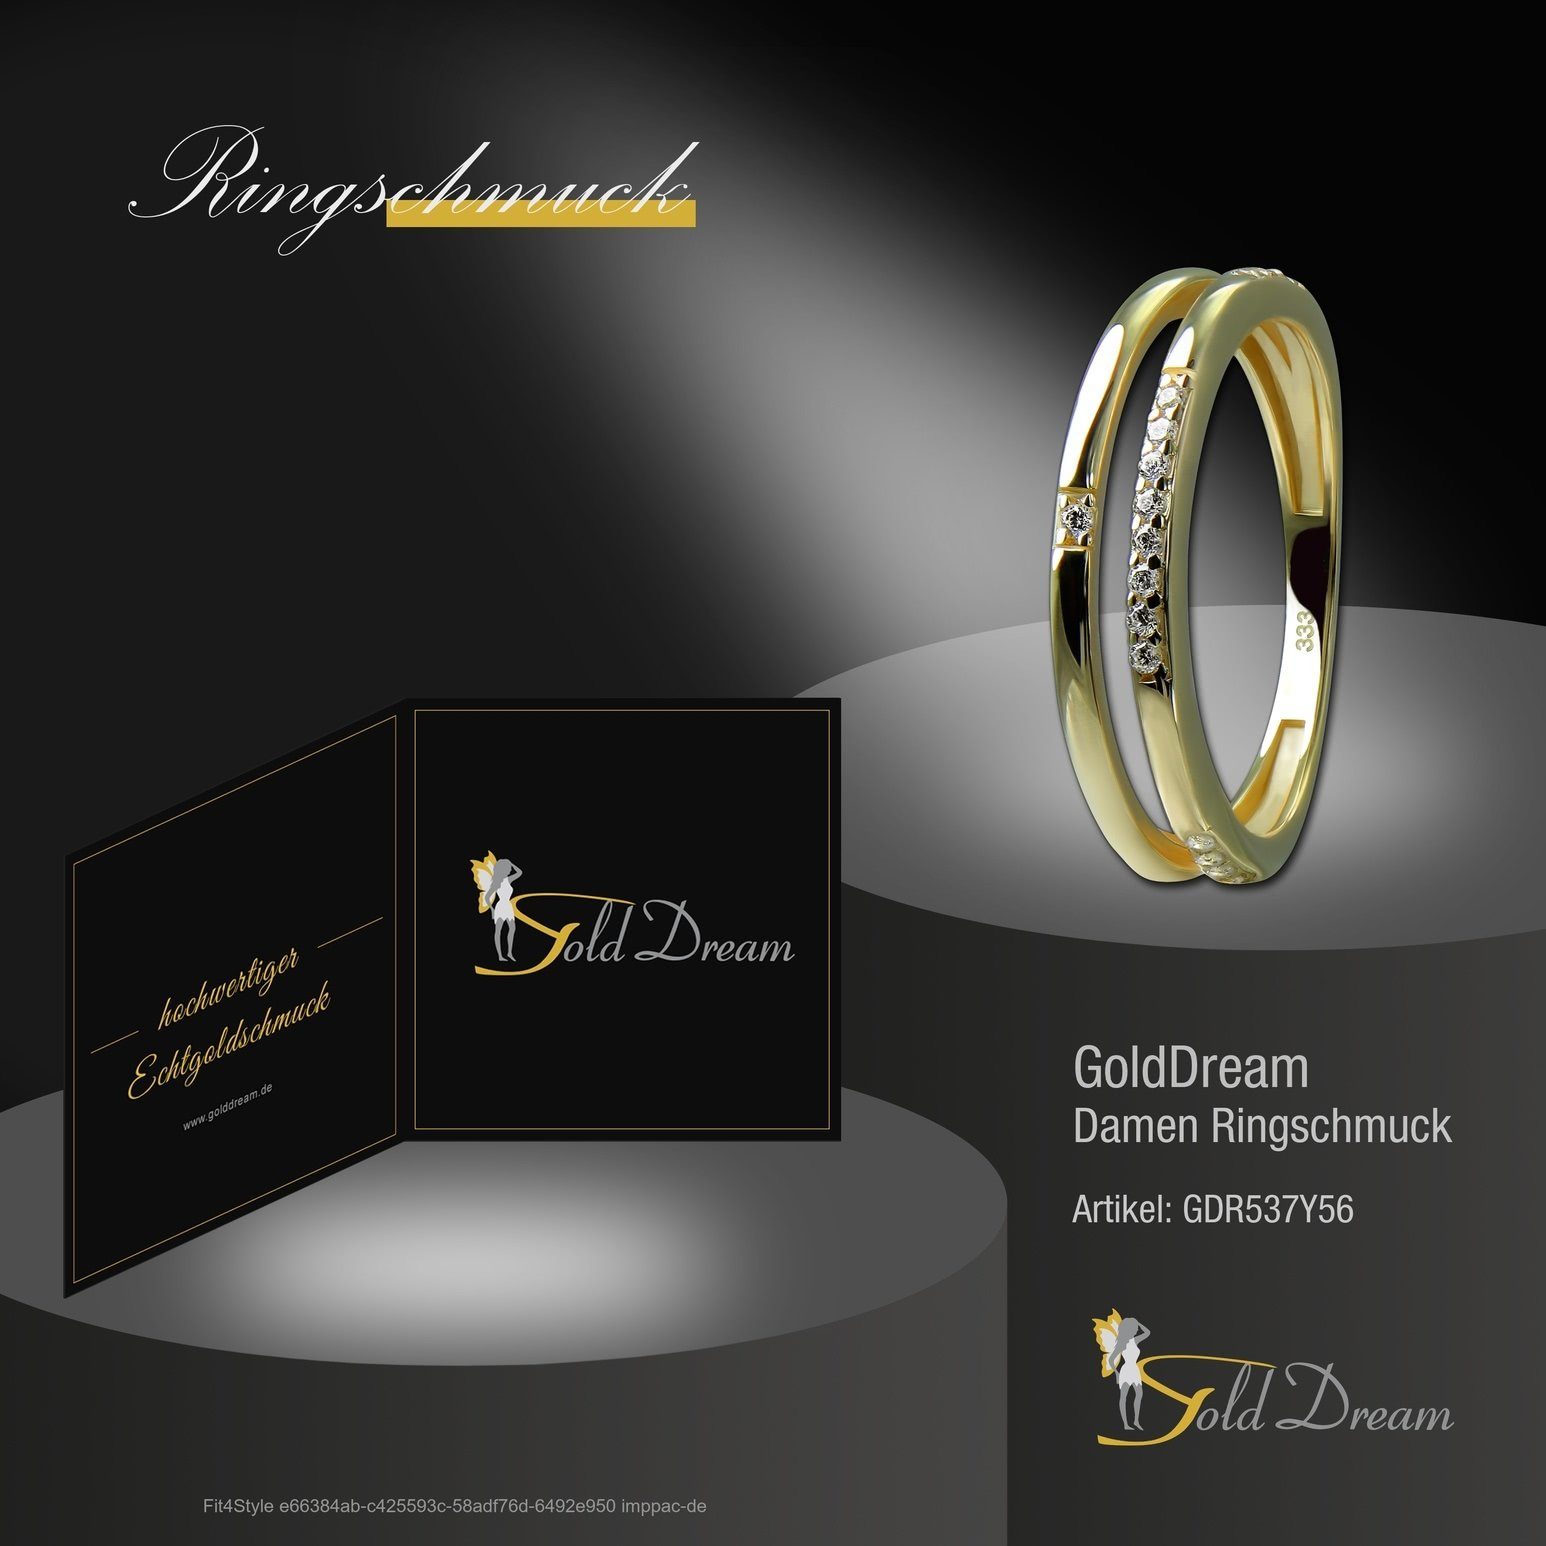 GoldDream Goldring Double GoldDream Gold Gelbgold - weiß Ring gold, 8 Farbe: (Fingerring), Karat, Ring Double 333 Damen Gr.56